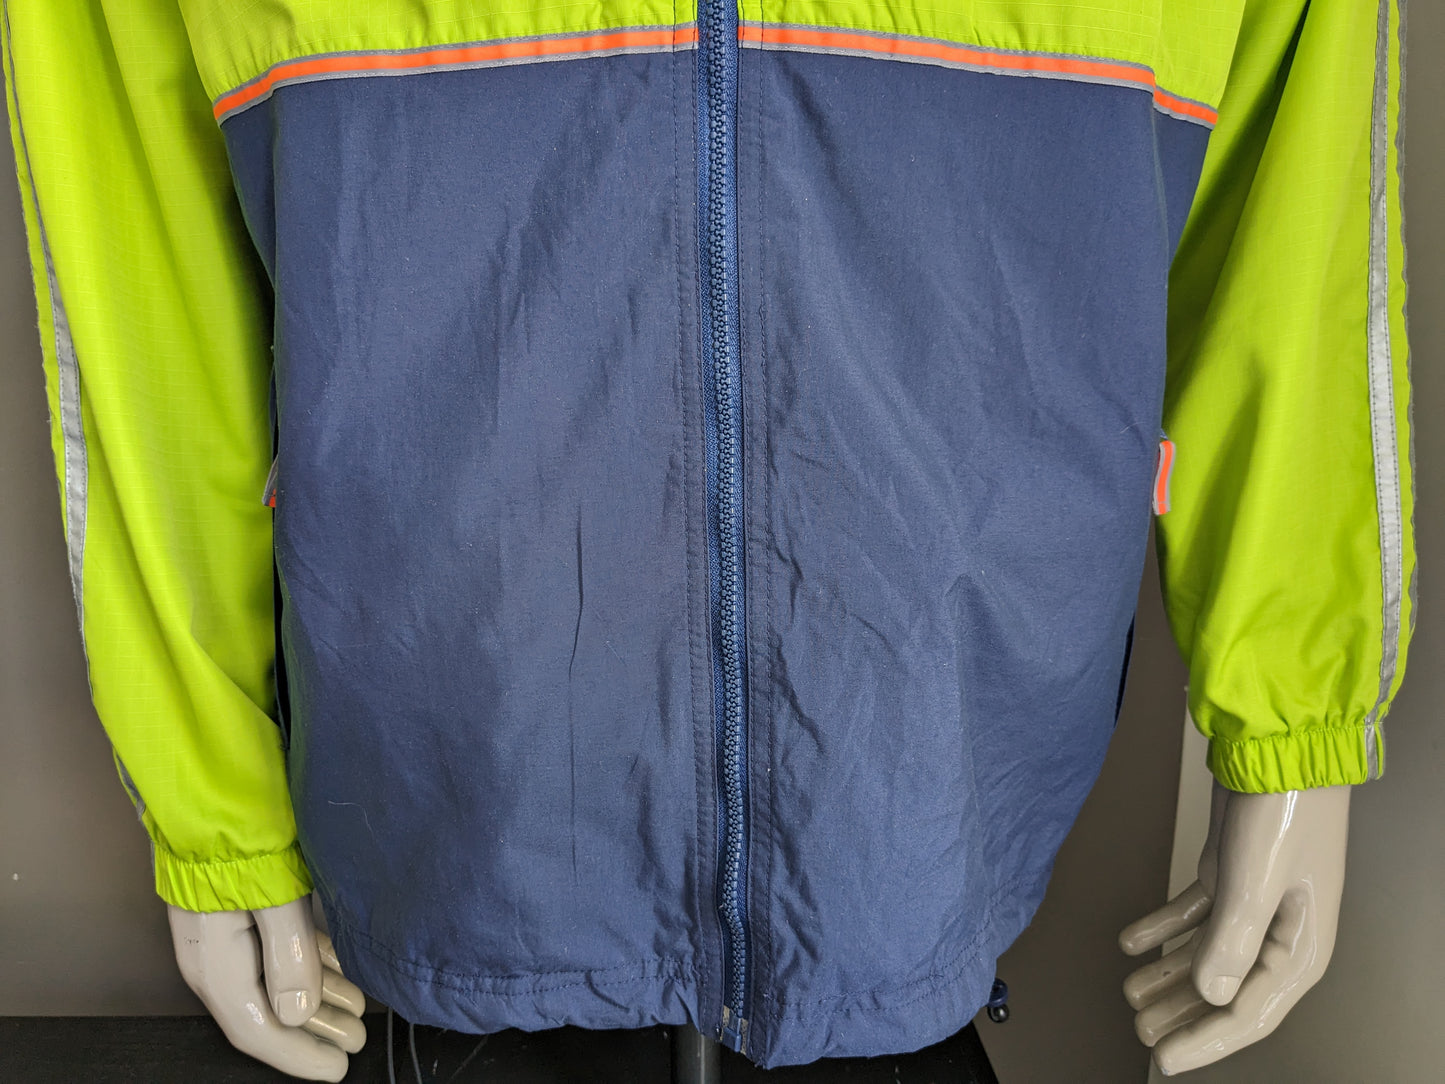 Adidas "Delfi 1000" Jacke / Jack. Gelbblau gefärbt. Größe xl.